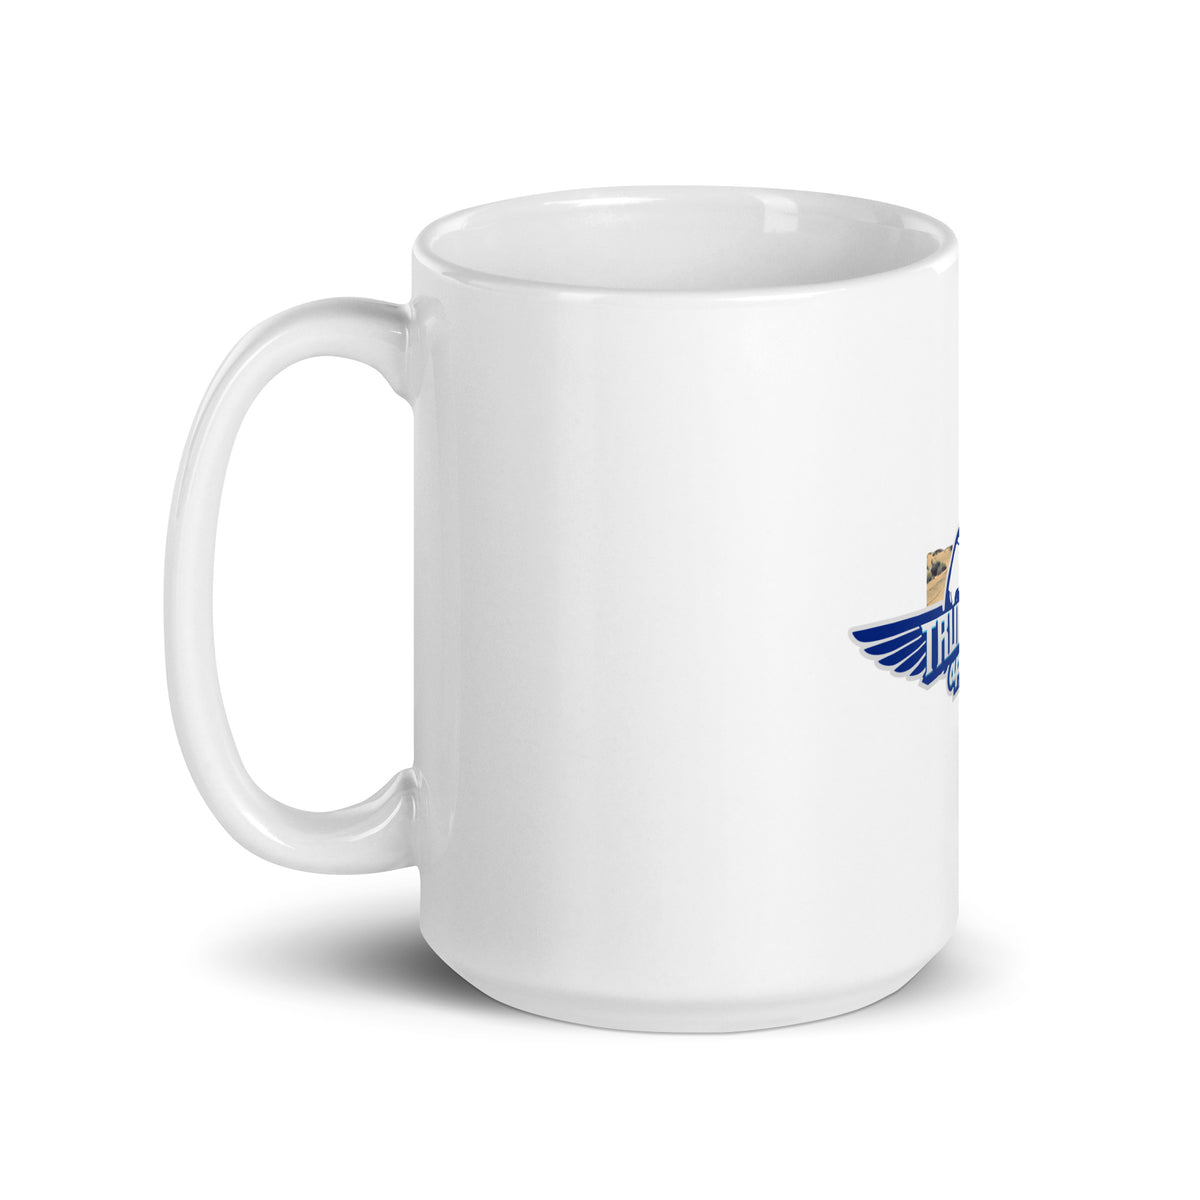 TGD White glossy mug